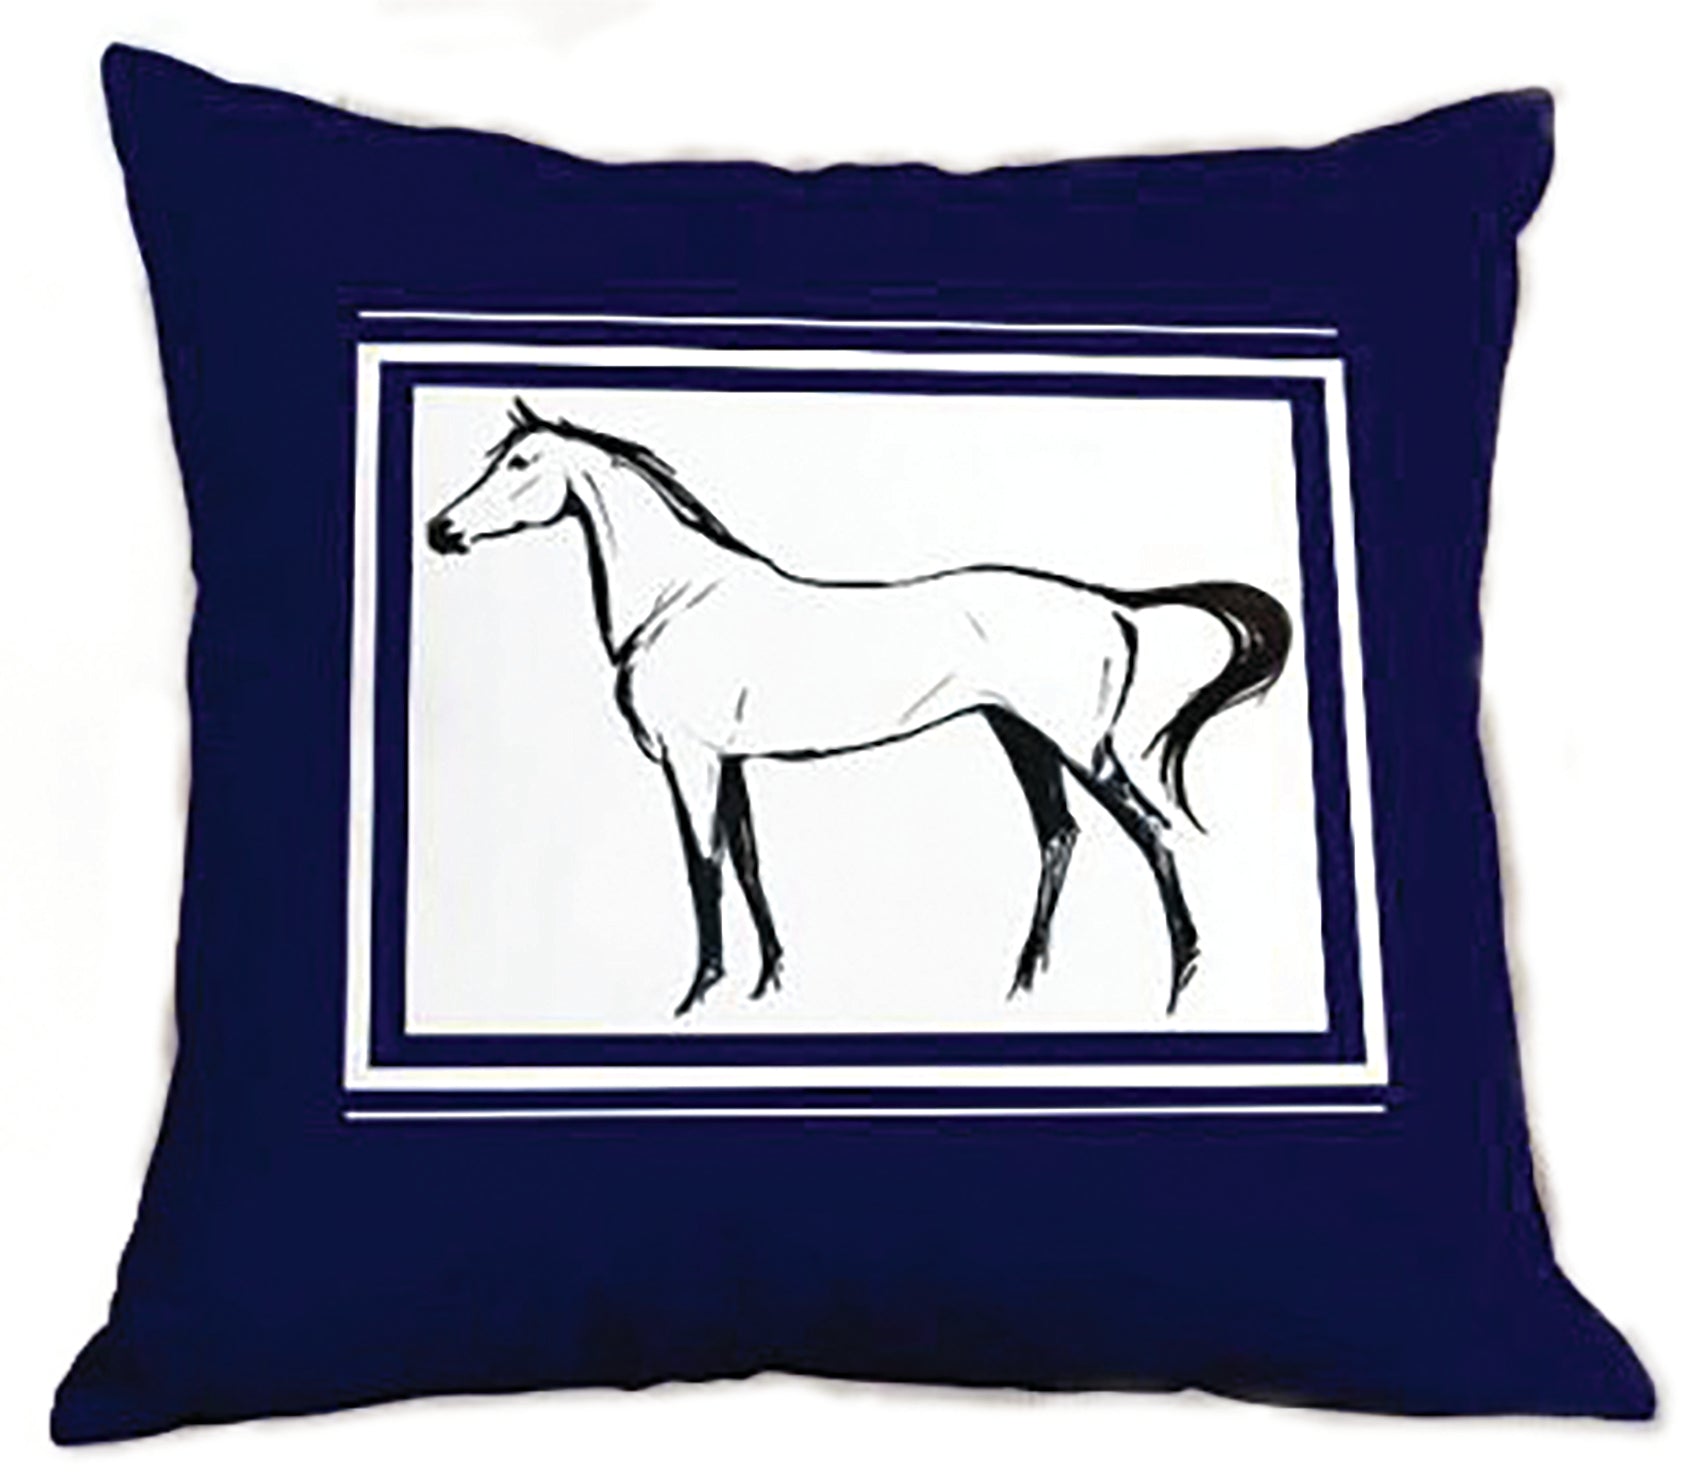 Horse sketch pillow /dark blue Patricia Borum